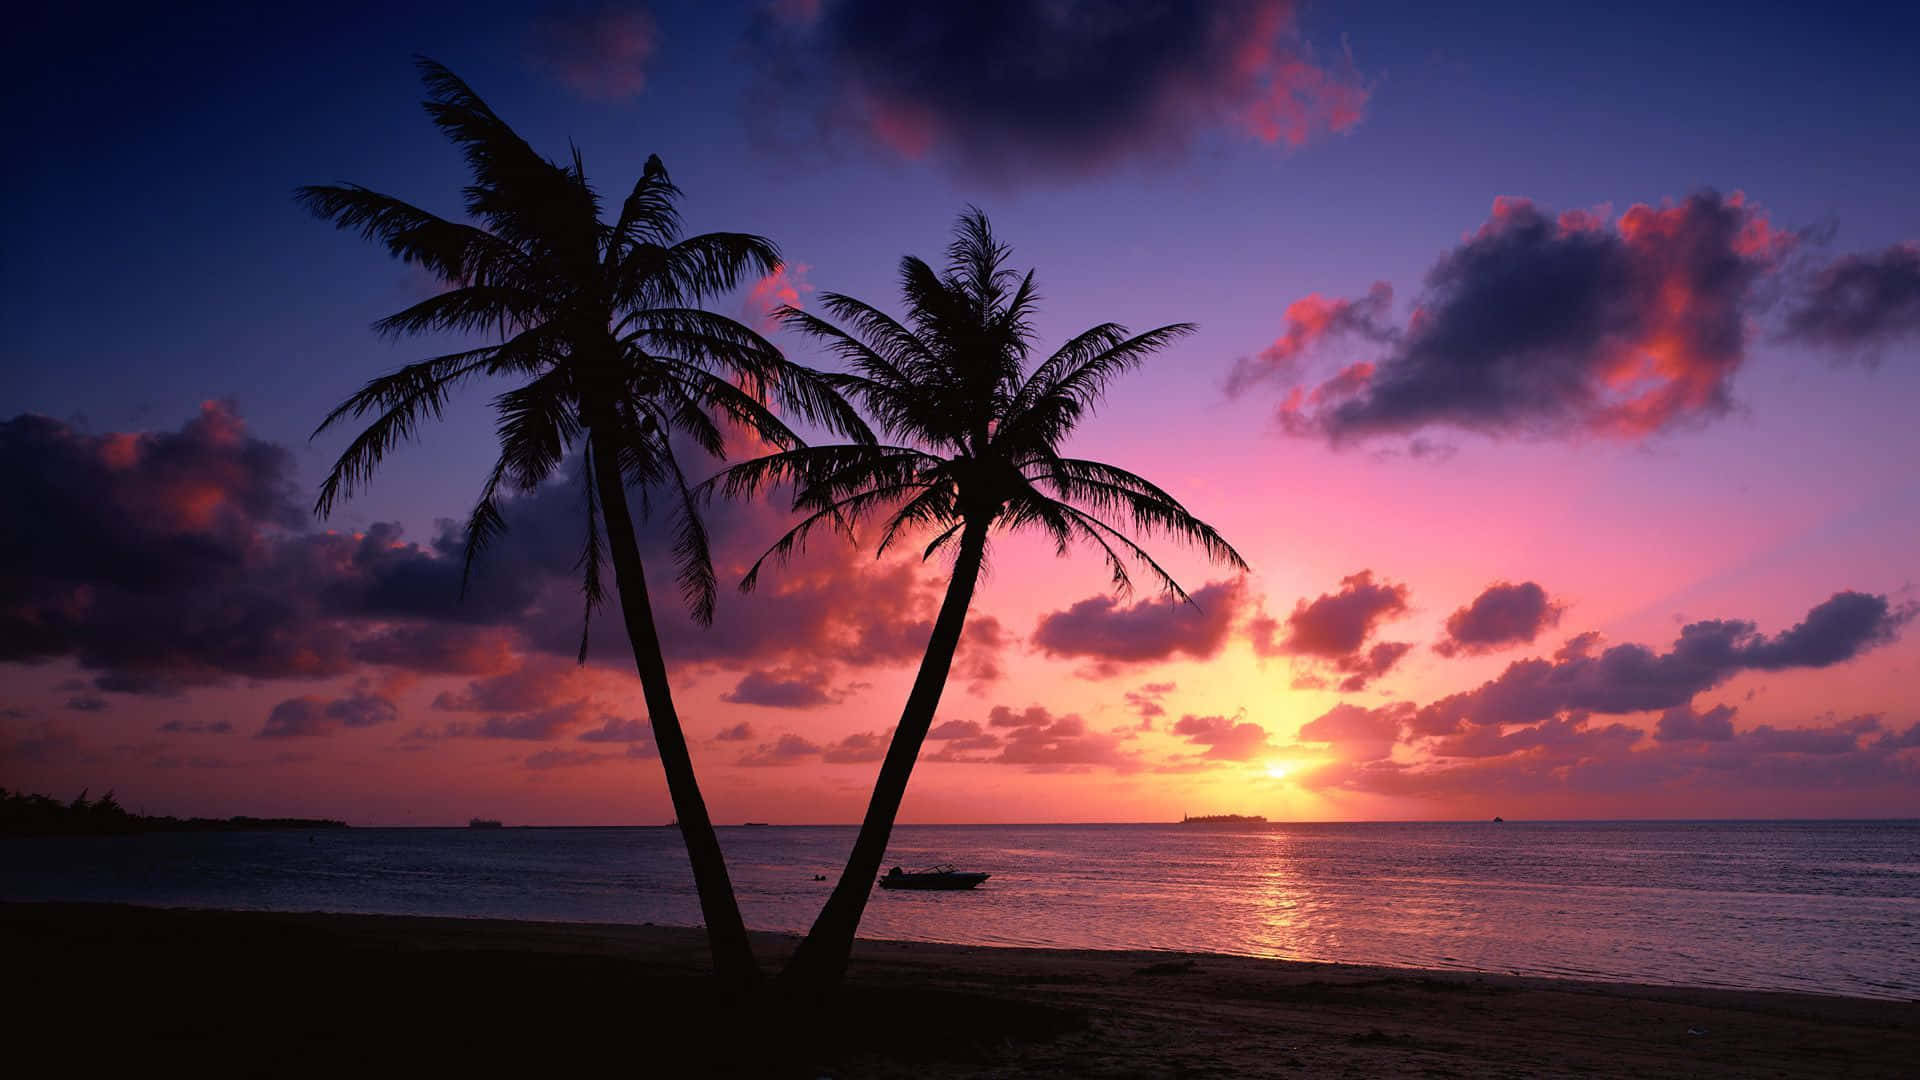 Free Beach Sunset Wallpaper Downloads, [400+] Beach Sunset Wallpapers for  FREE 